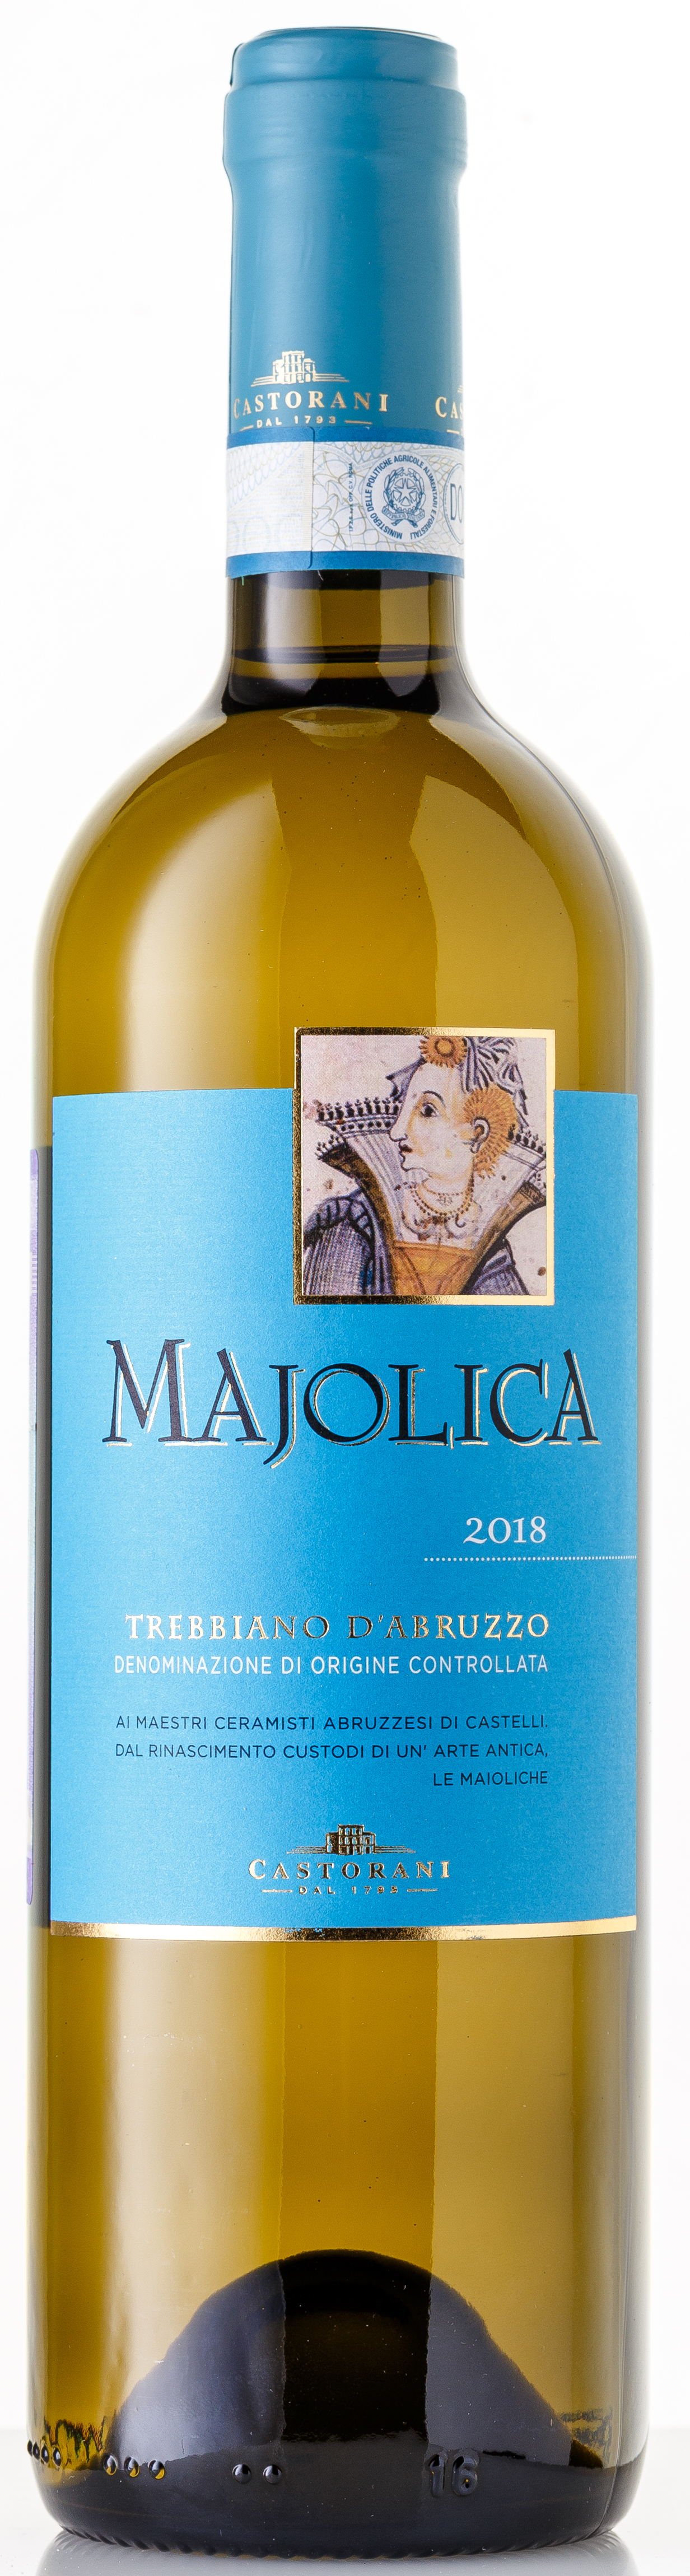 Белое сухое вино треббьяно. Треббьяно д’Абруццо. Вино Треббьяно д'Абруццо белое сухое. Треббьяно вино белое Италия. Вино Фантини Треббьяно д'Абруццо бел.сух.2019 0,75.